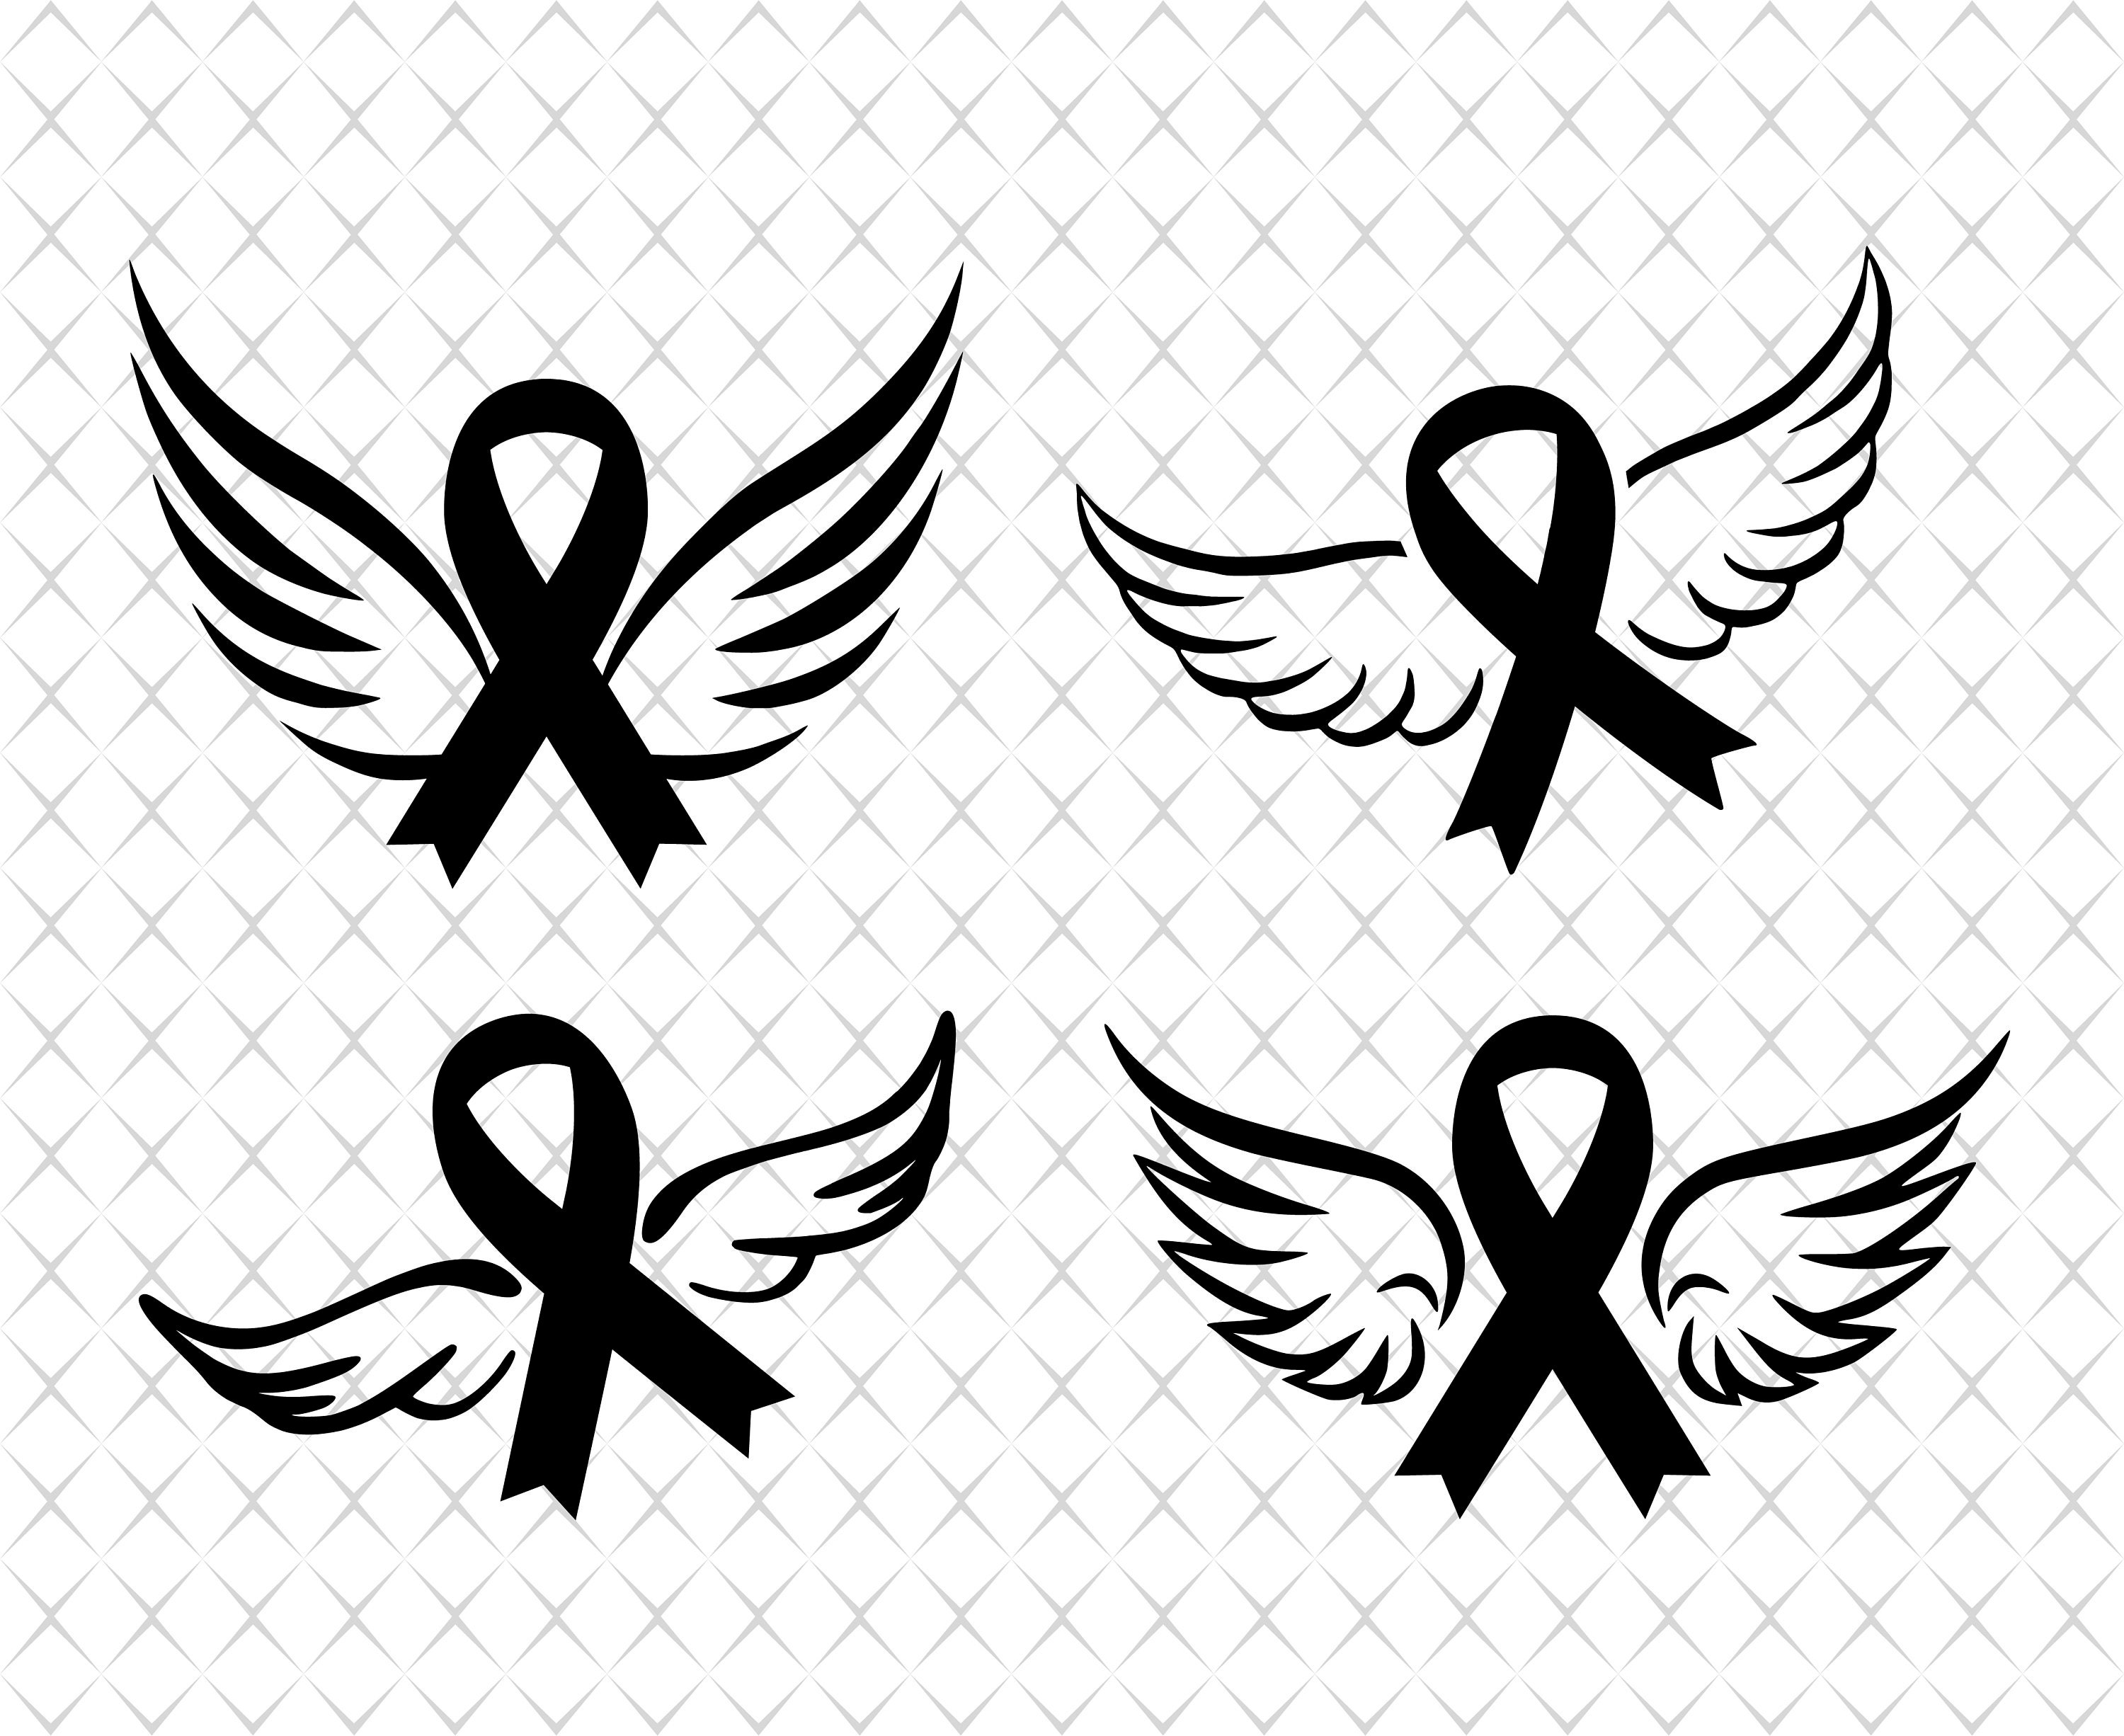 Cancer ribbon with wings svg Cancer ribbon svg Cancer ribbon | Etsy